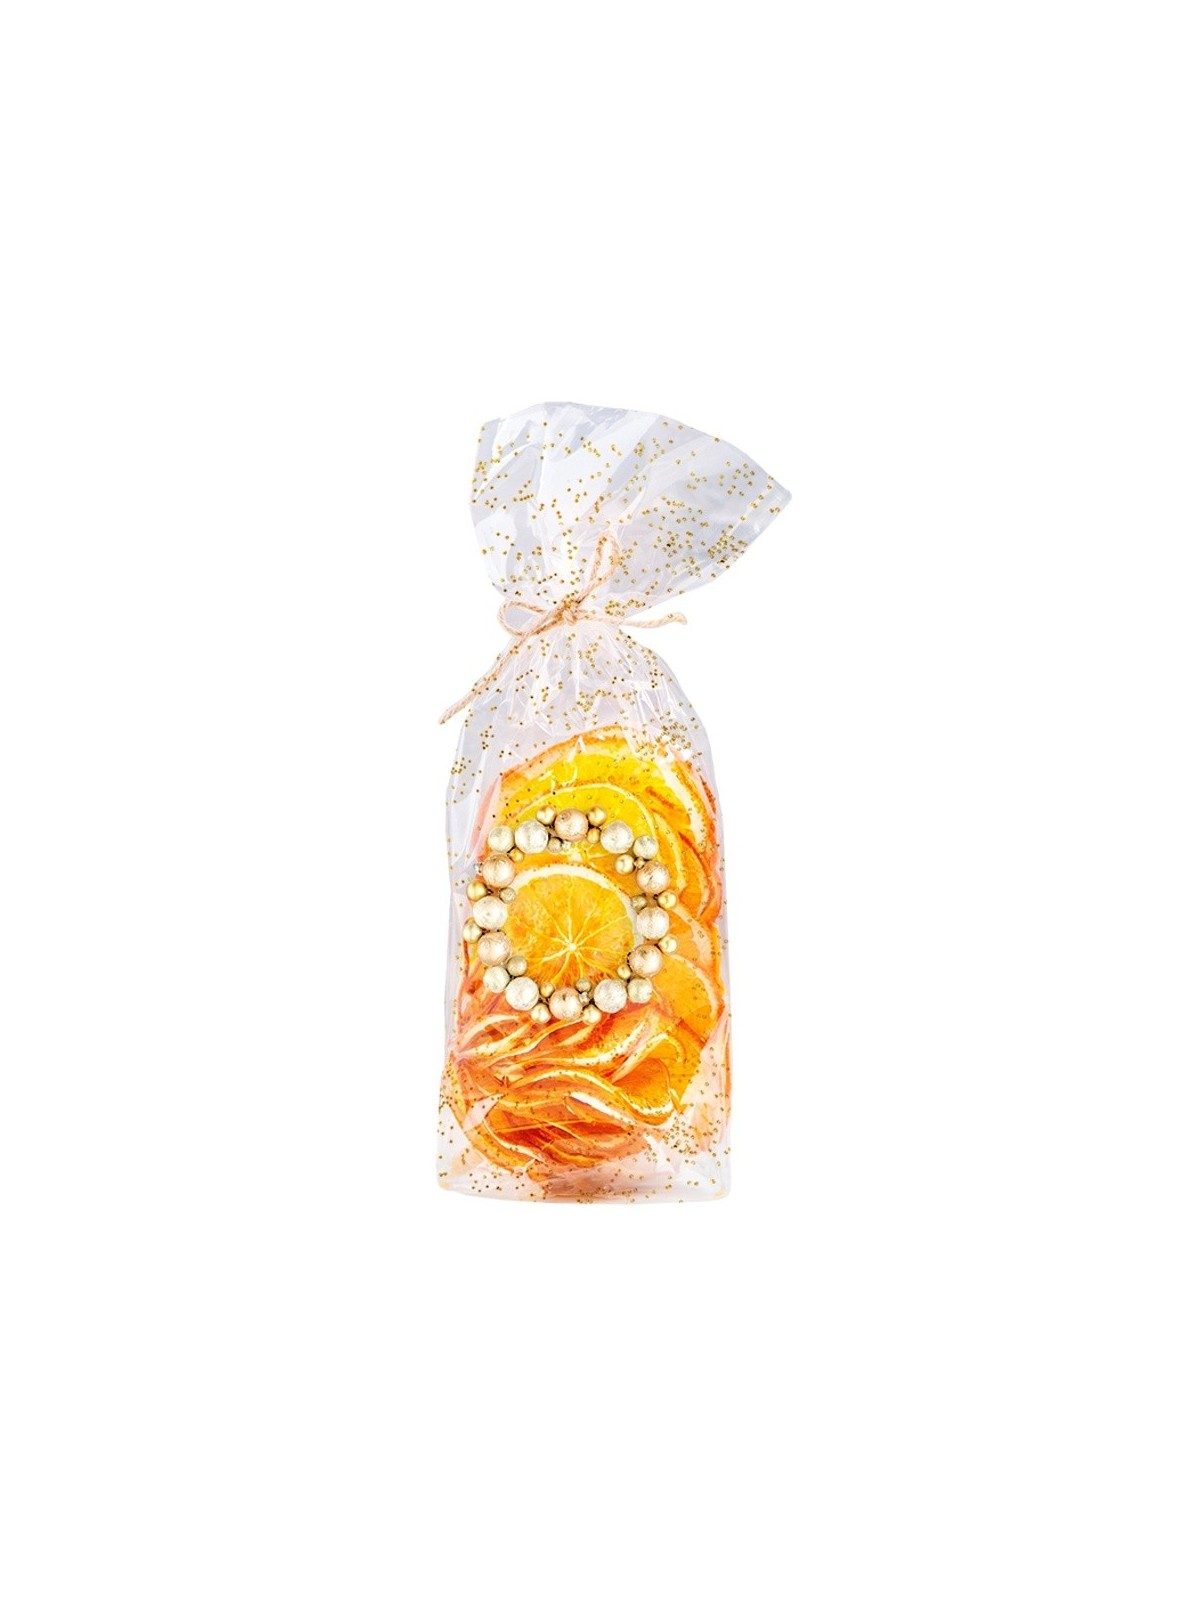 Cellophane bag small - Gold  - 11x21cm - 10 pcs